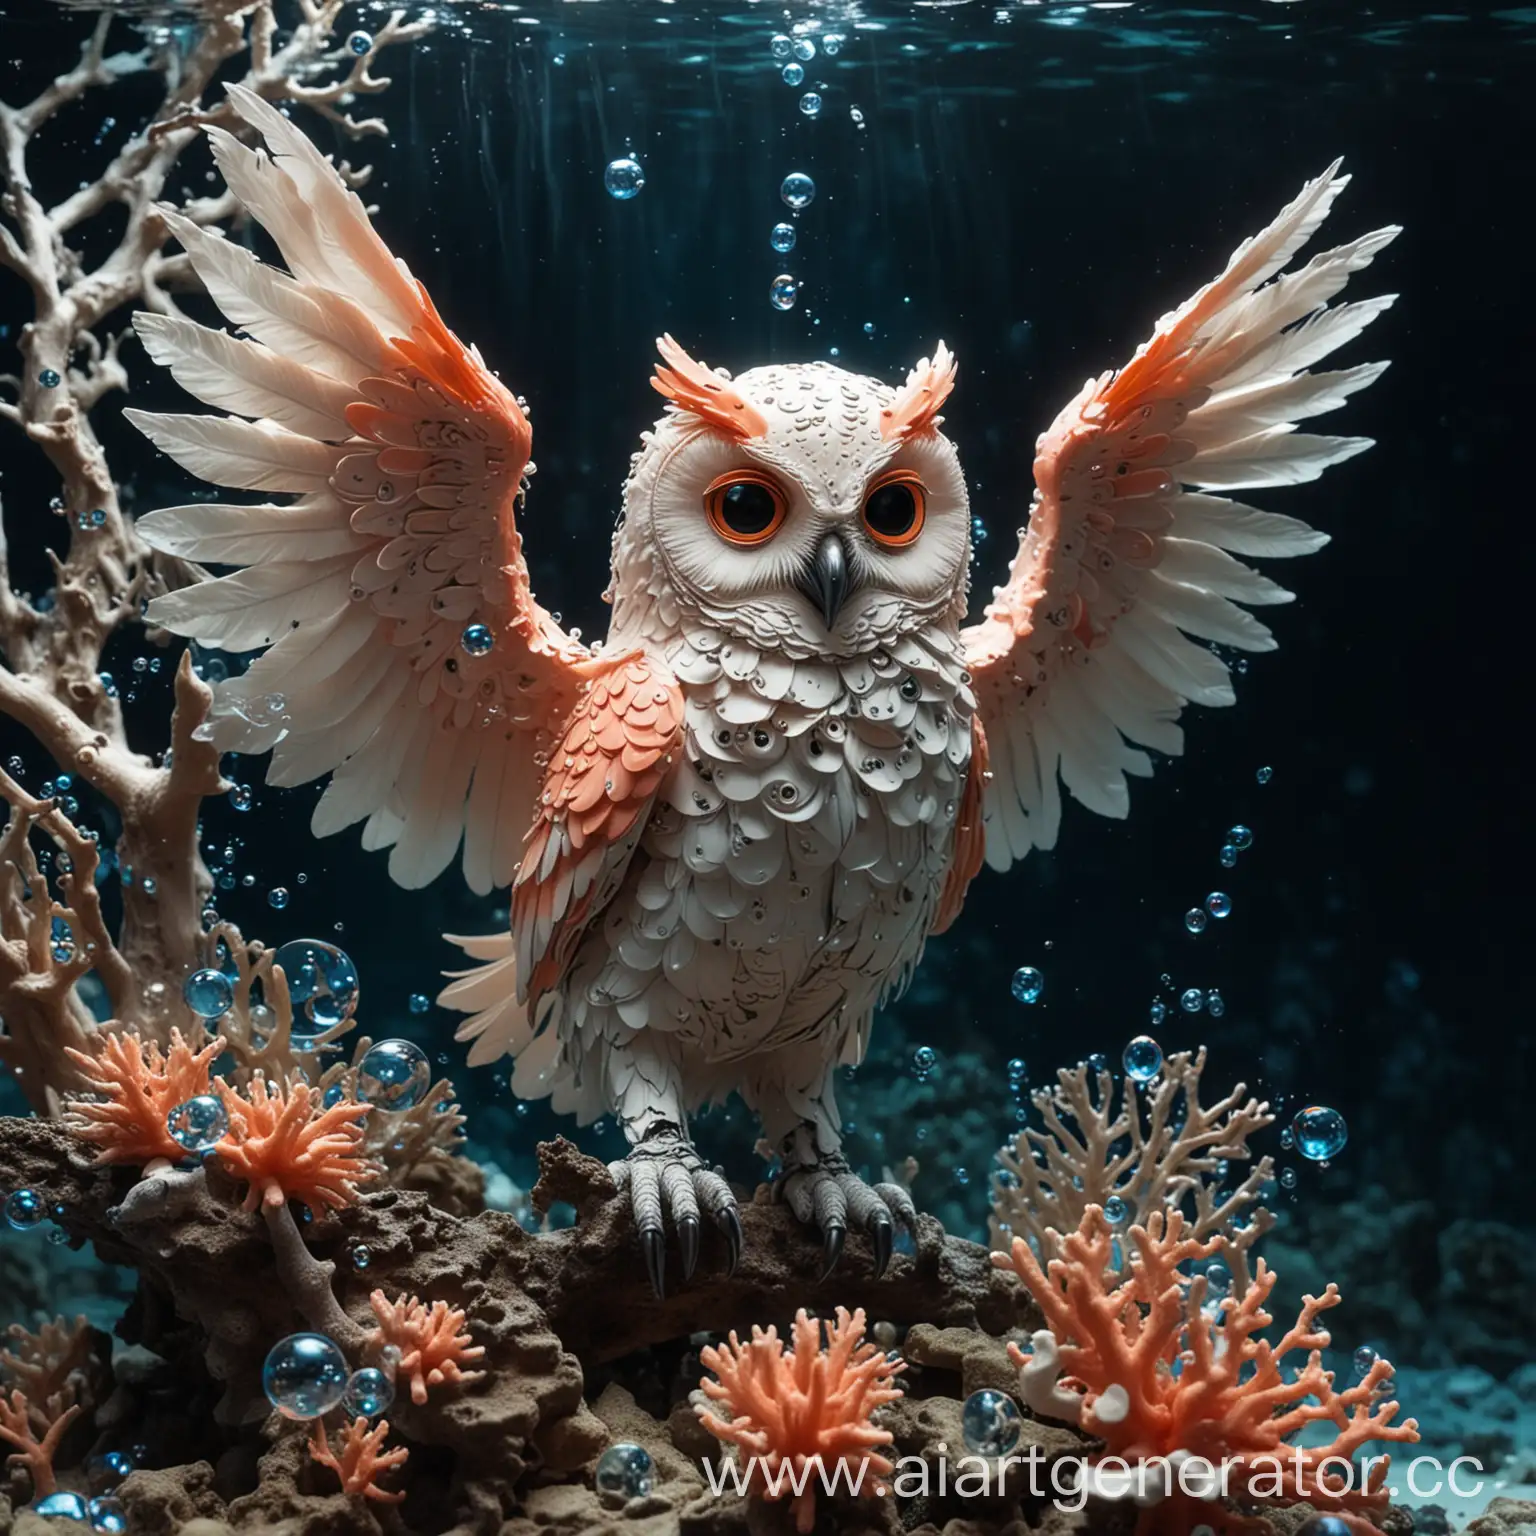 Cyborg-Night-Owl-Sitting-Underwater-on-Coral-Branch